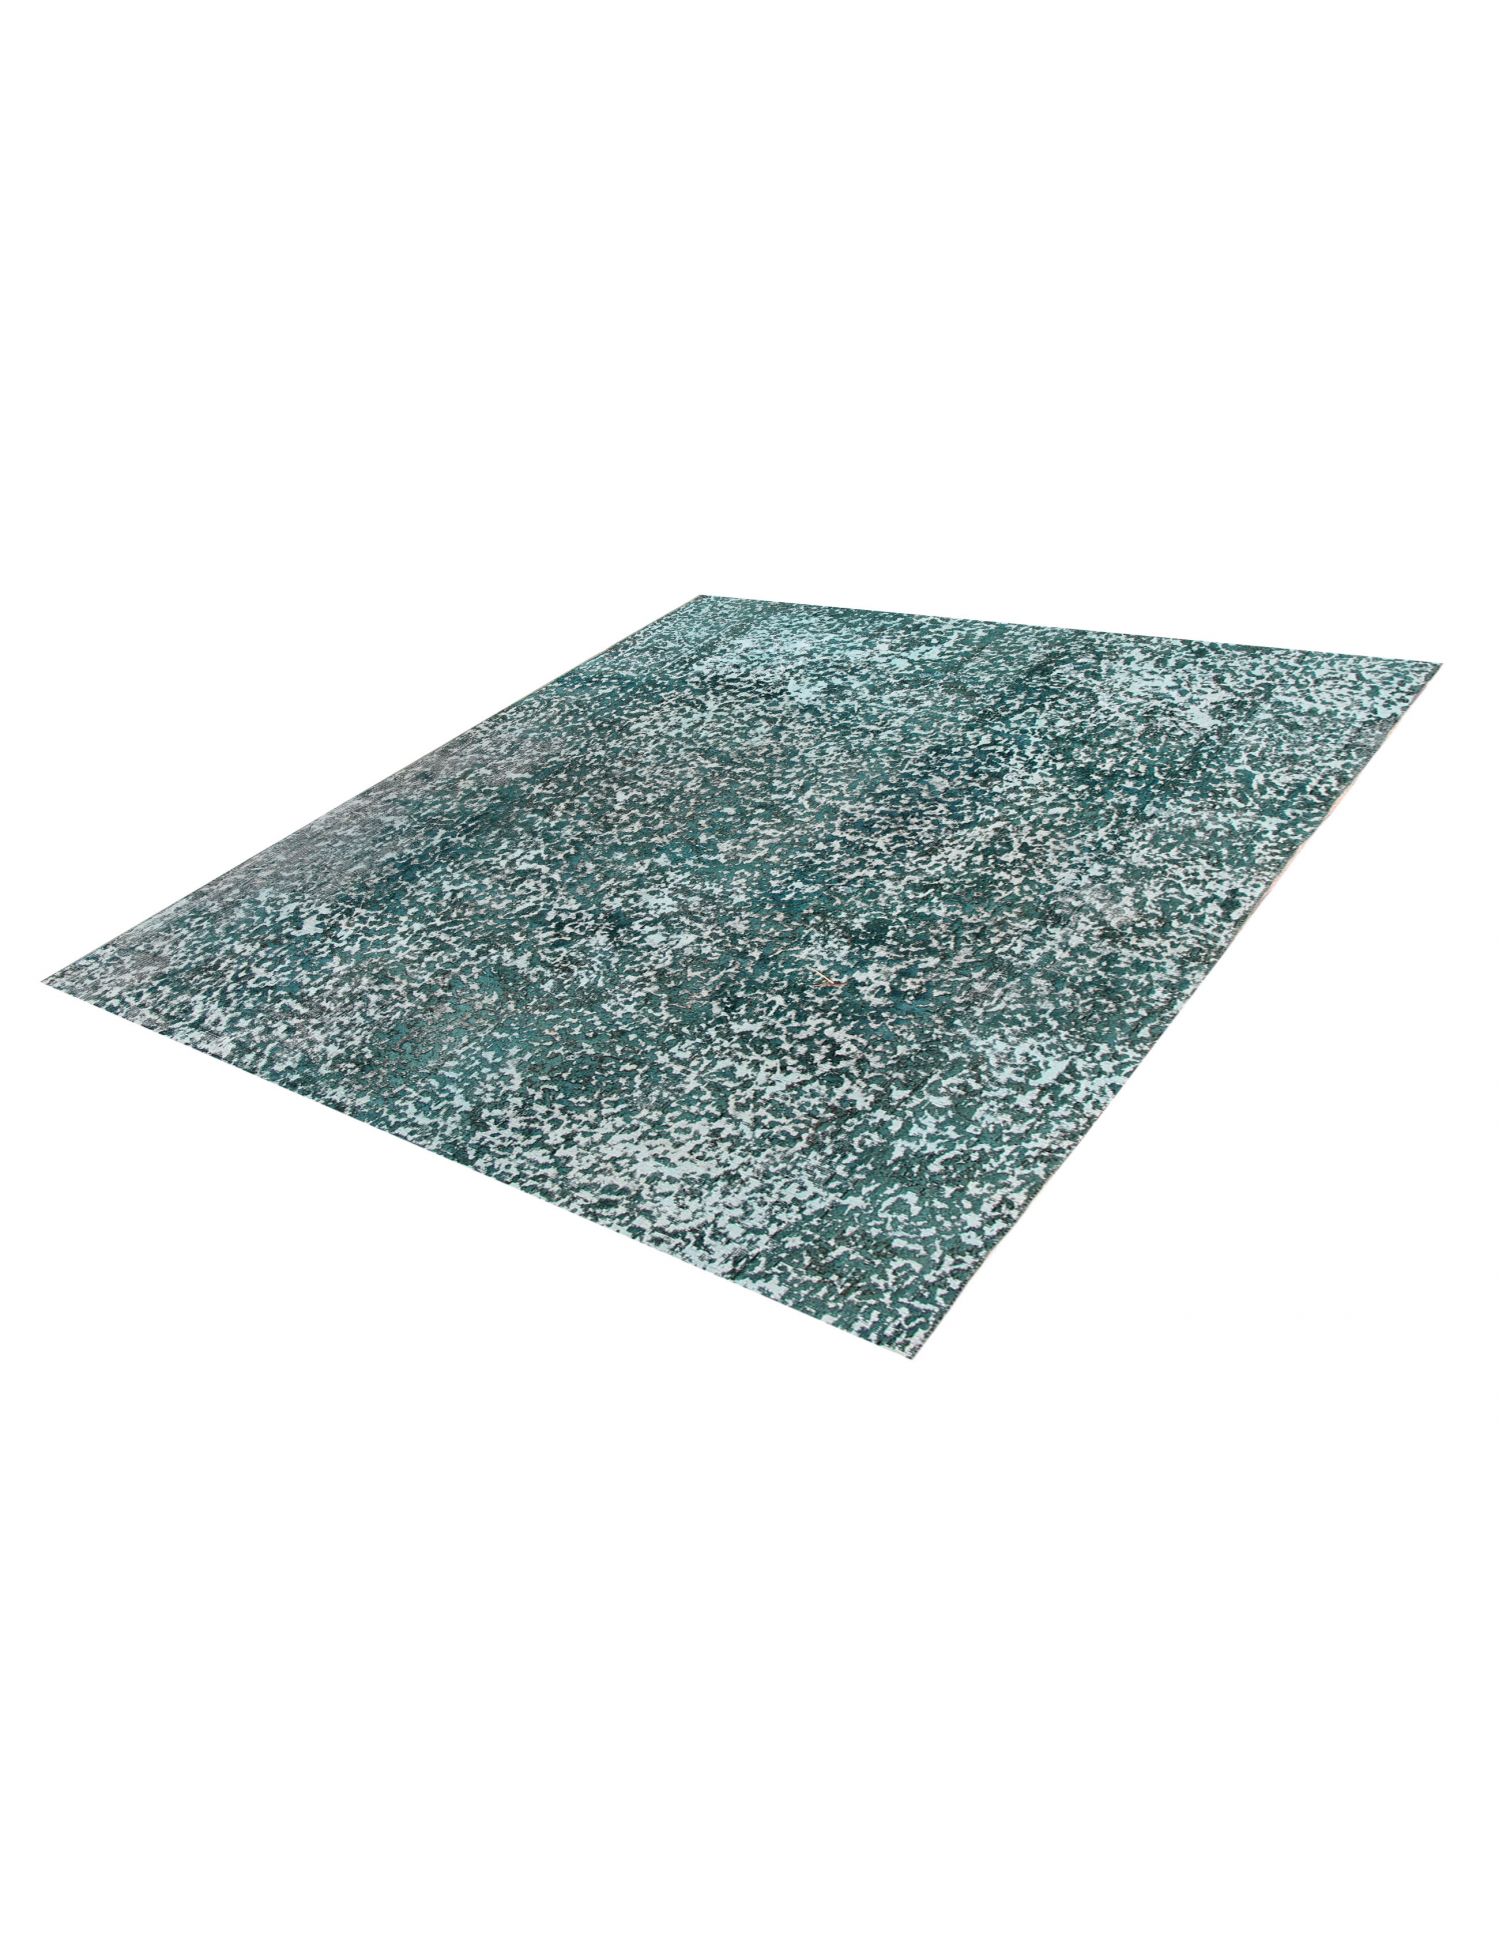 Quadrat  Vintage Teppich  grün <br/>209 x 209 cm